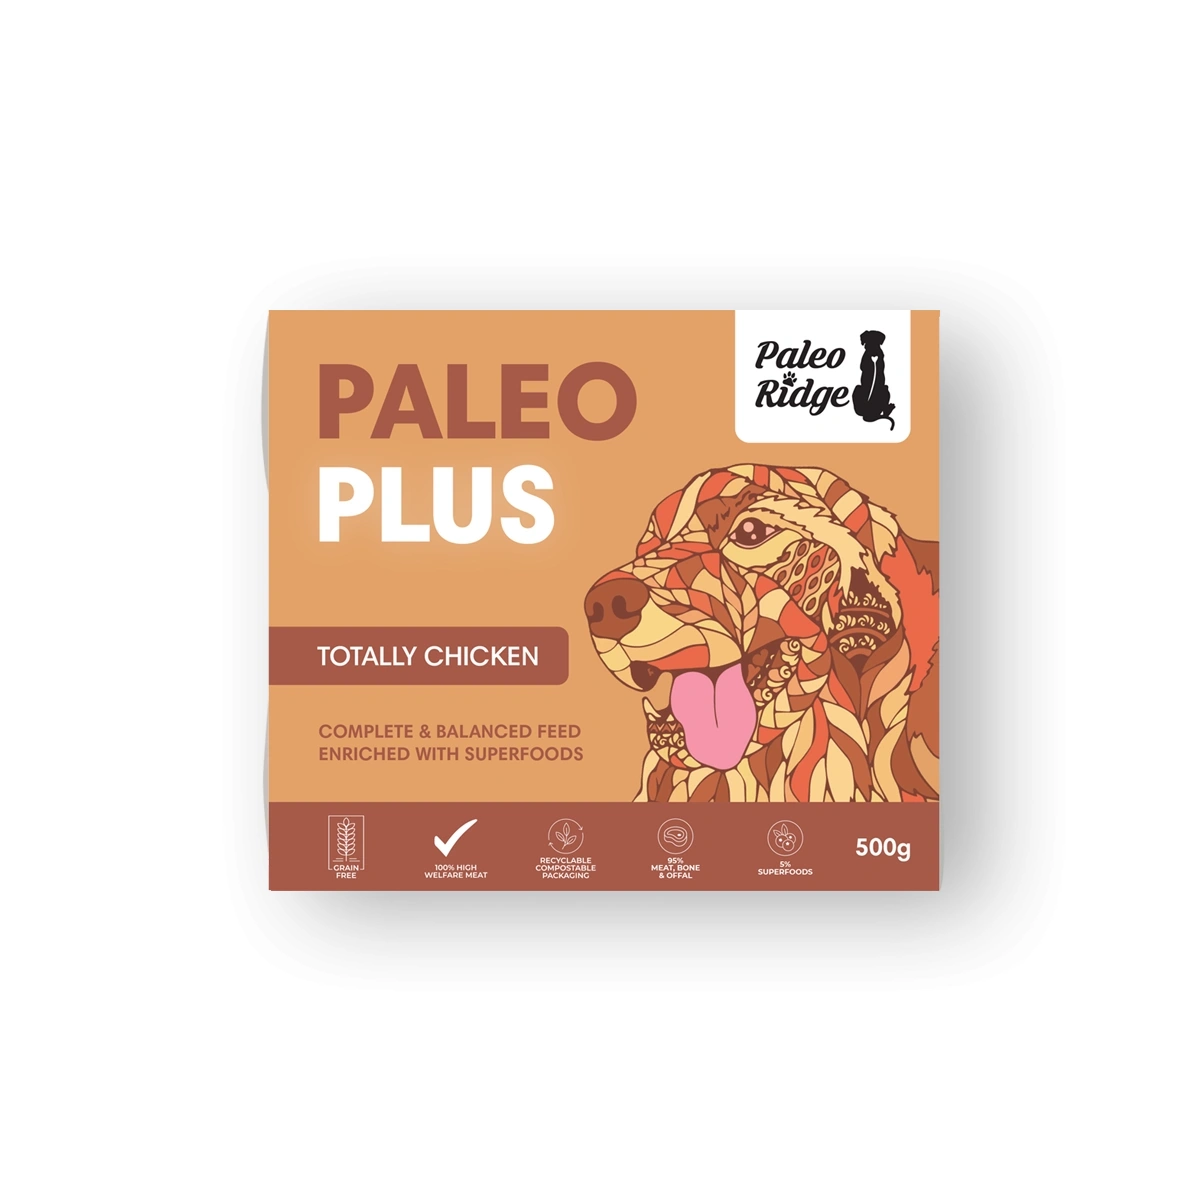 Paleo Ridge – Paleo Plus Totally Chicken 500g – Pawfect Supplies Ltd Product Image